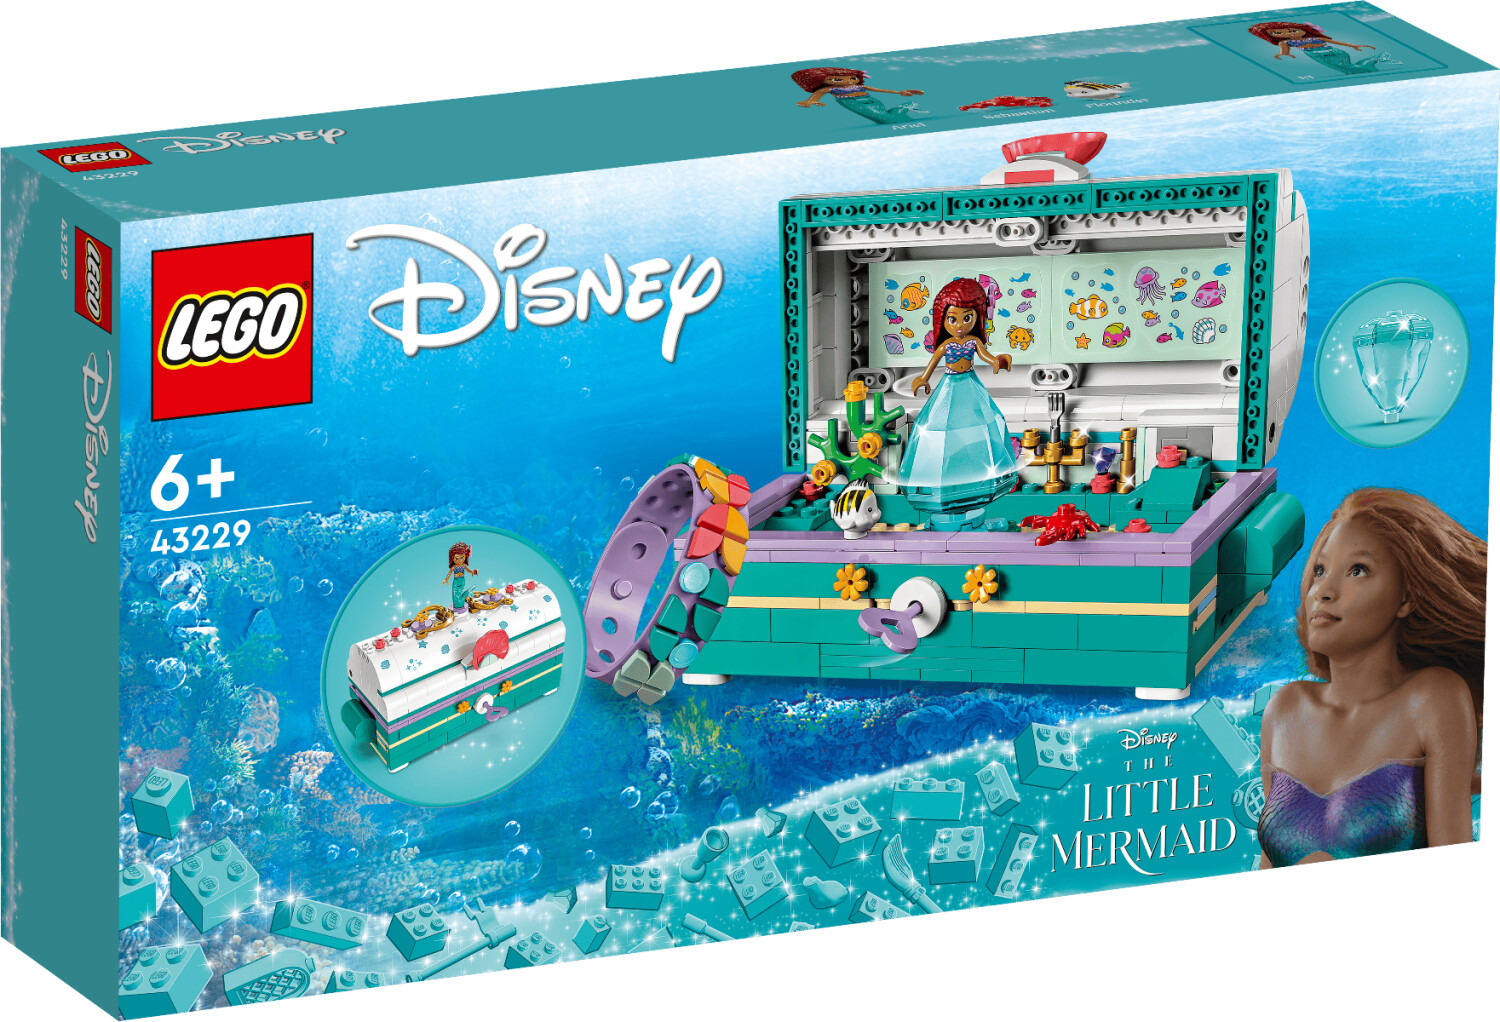 LEGO 43229 Disney Princess - Arielles Schatztruhe